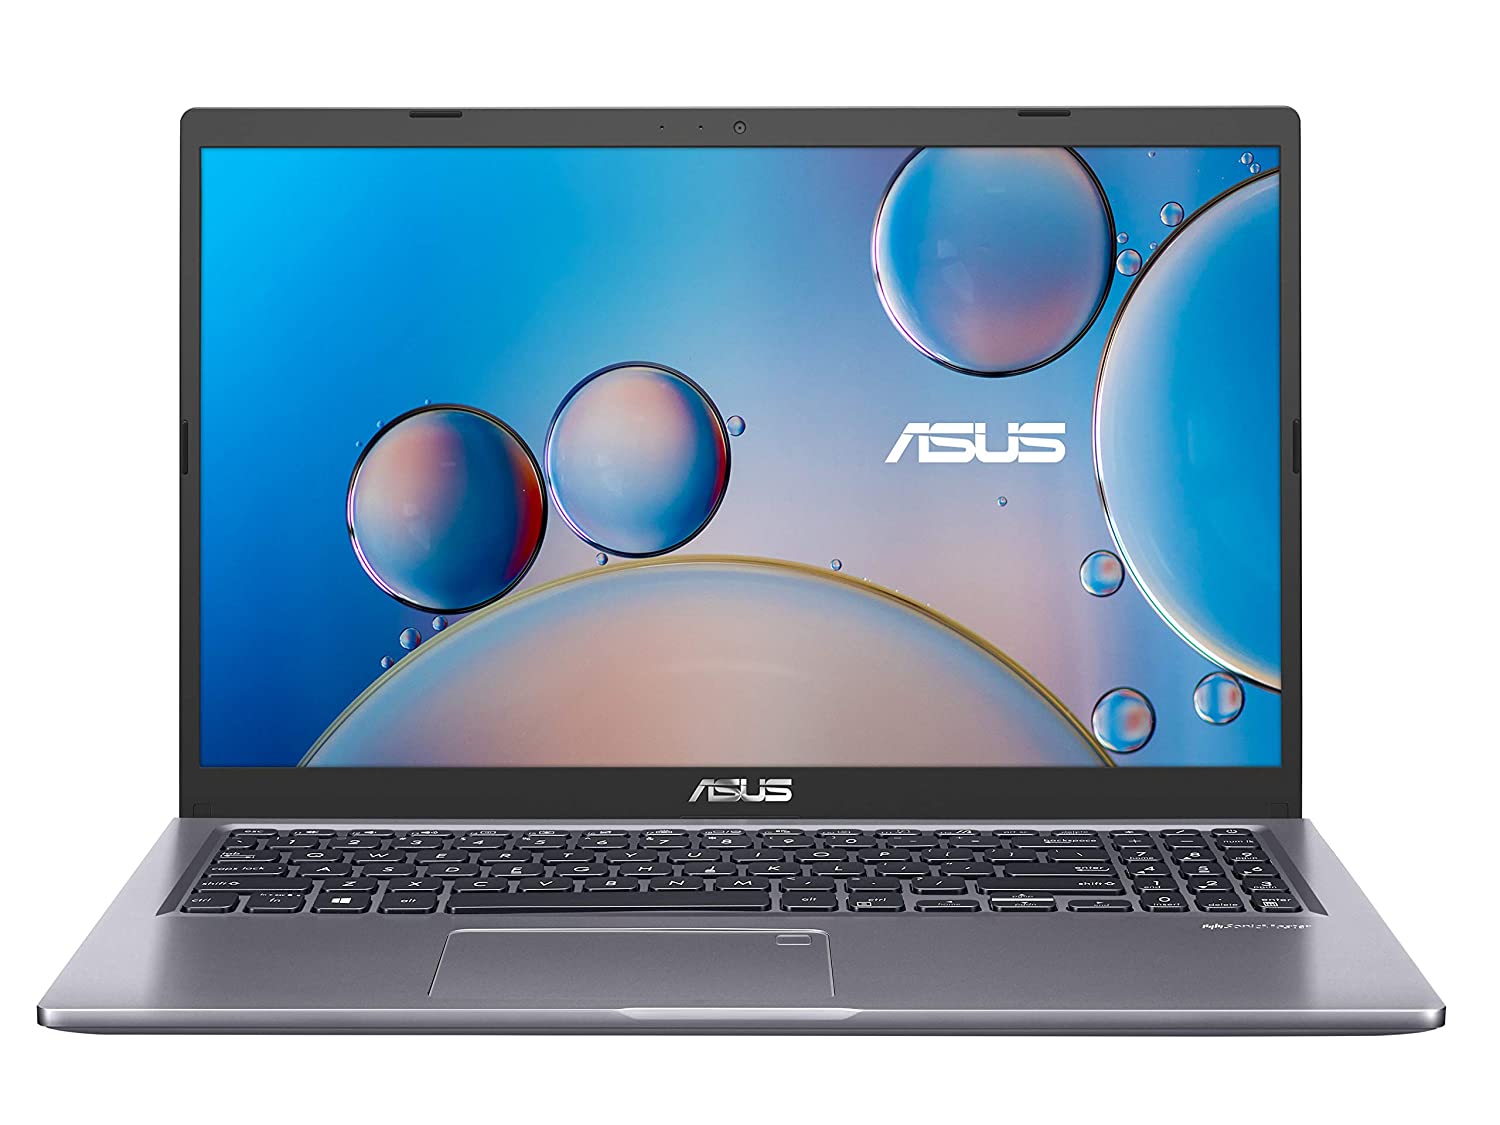 ASUS VivoBook 15 (2020) Intel Core i3-1005G1 10th Gen, 15.6